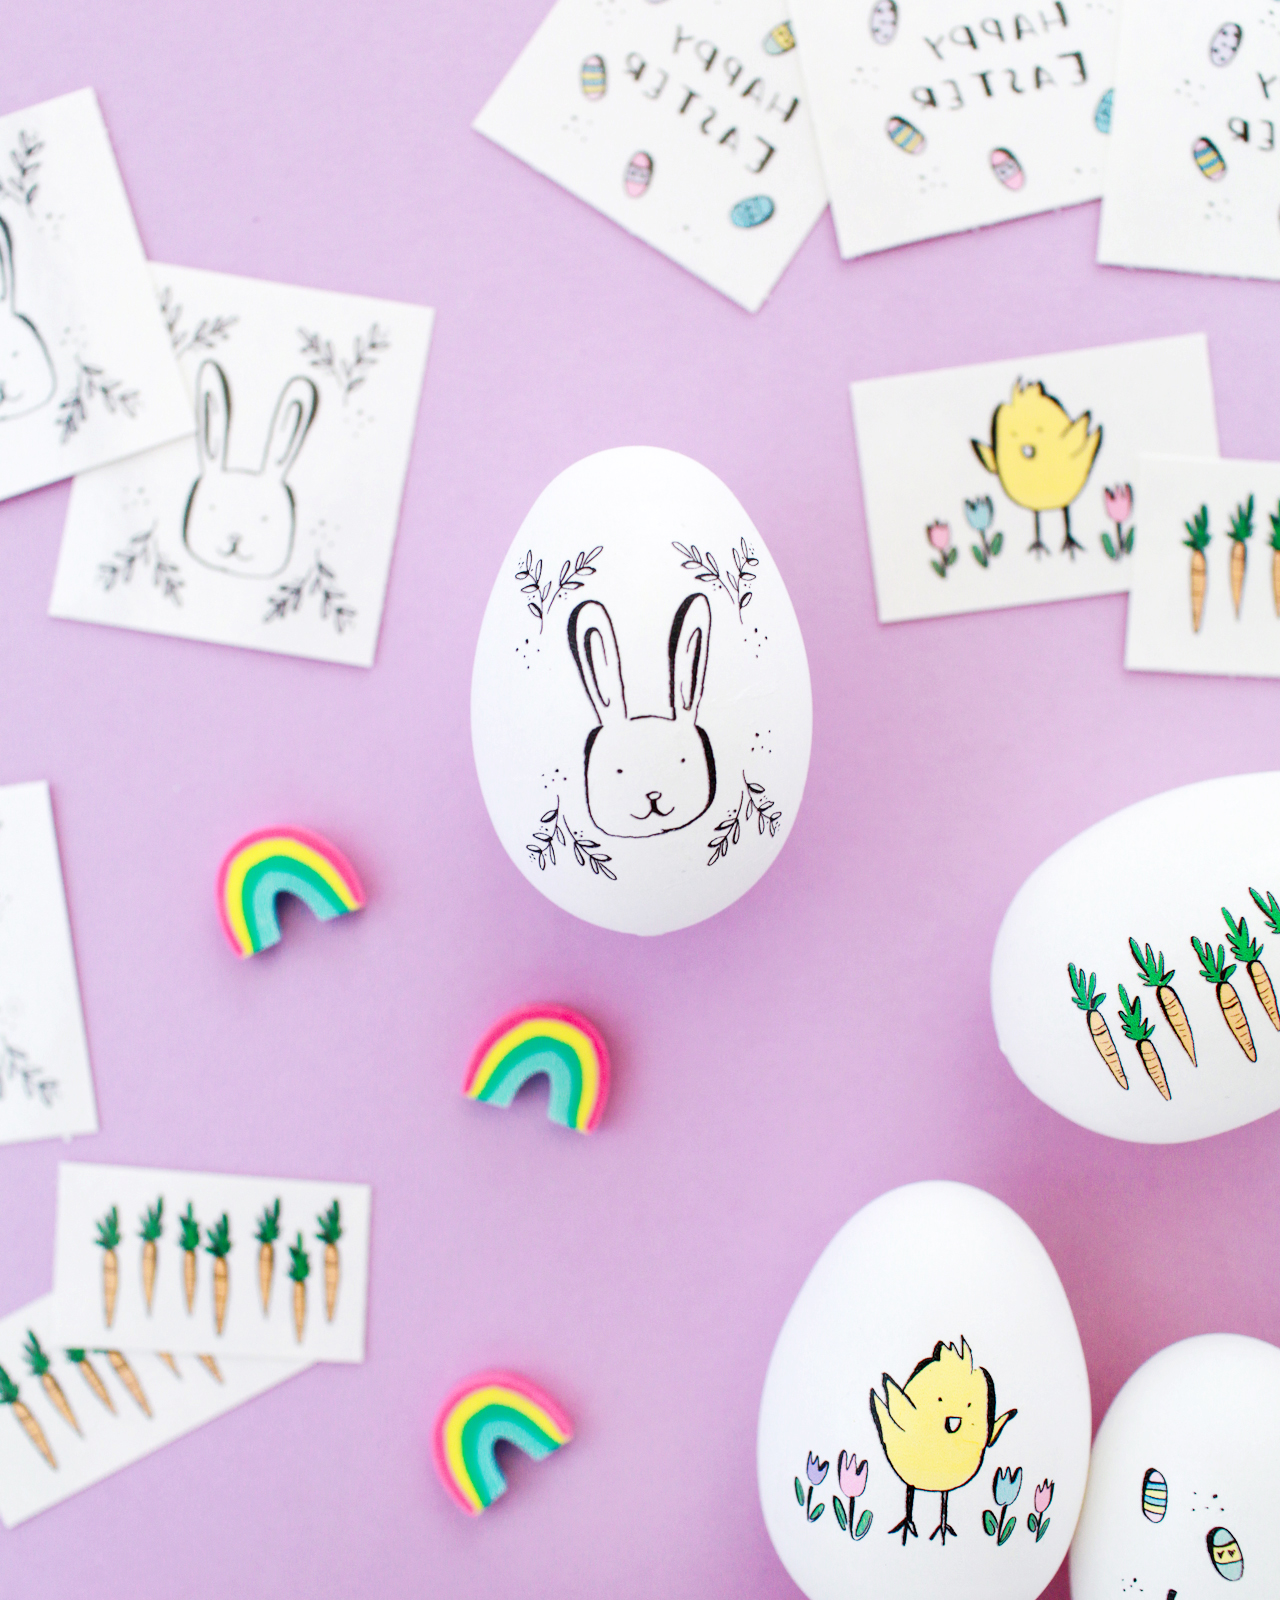 DIY Illustrated Temporary Tattoo Easter Eggs